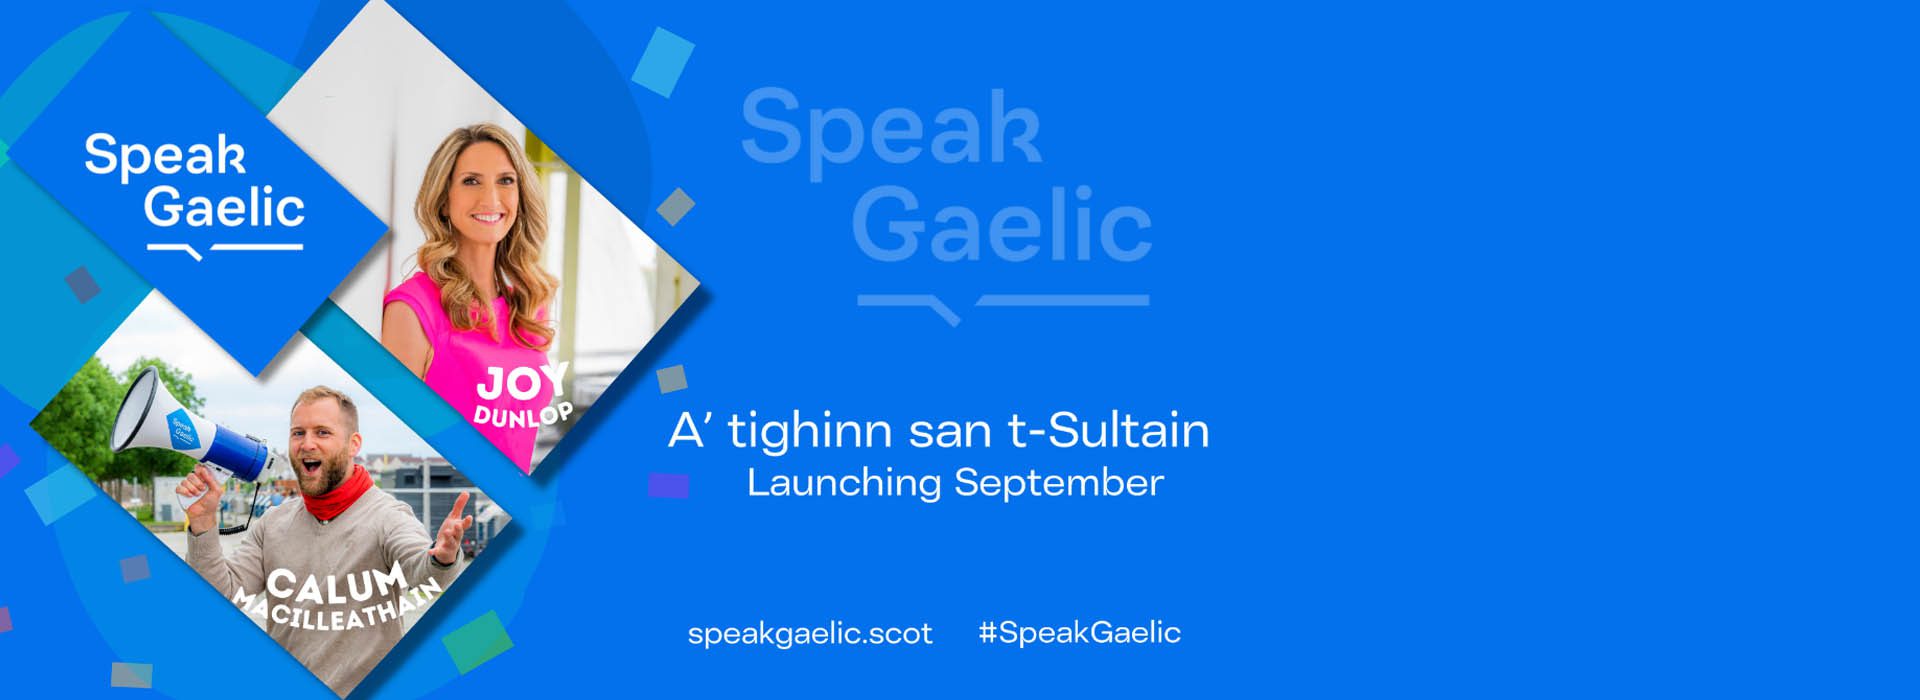 speak-gaelic-banner